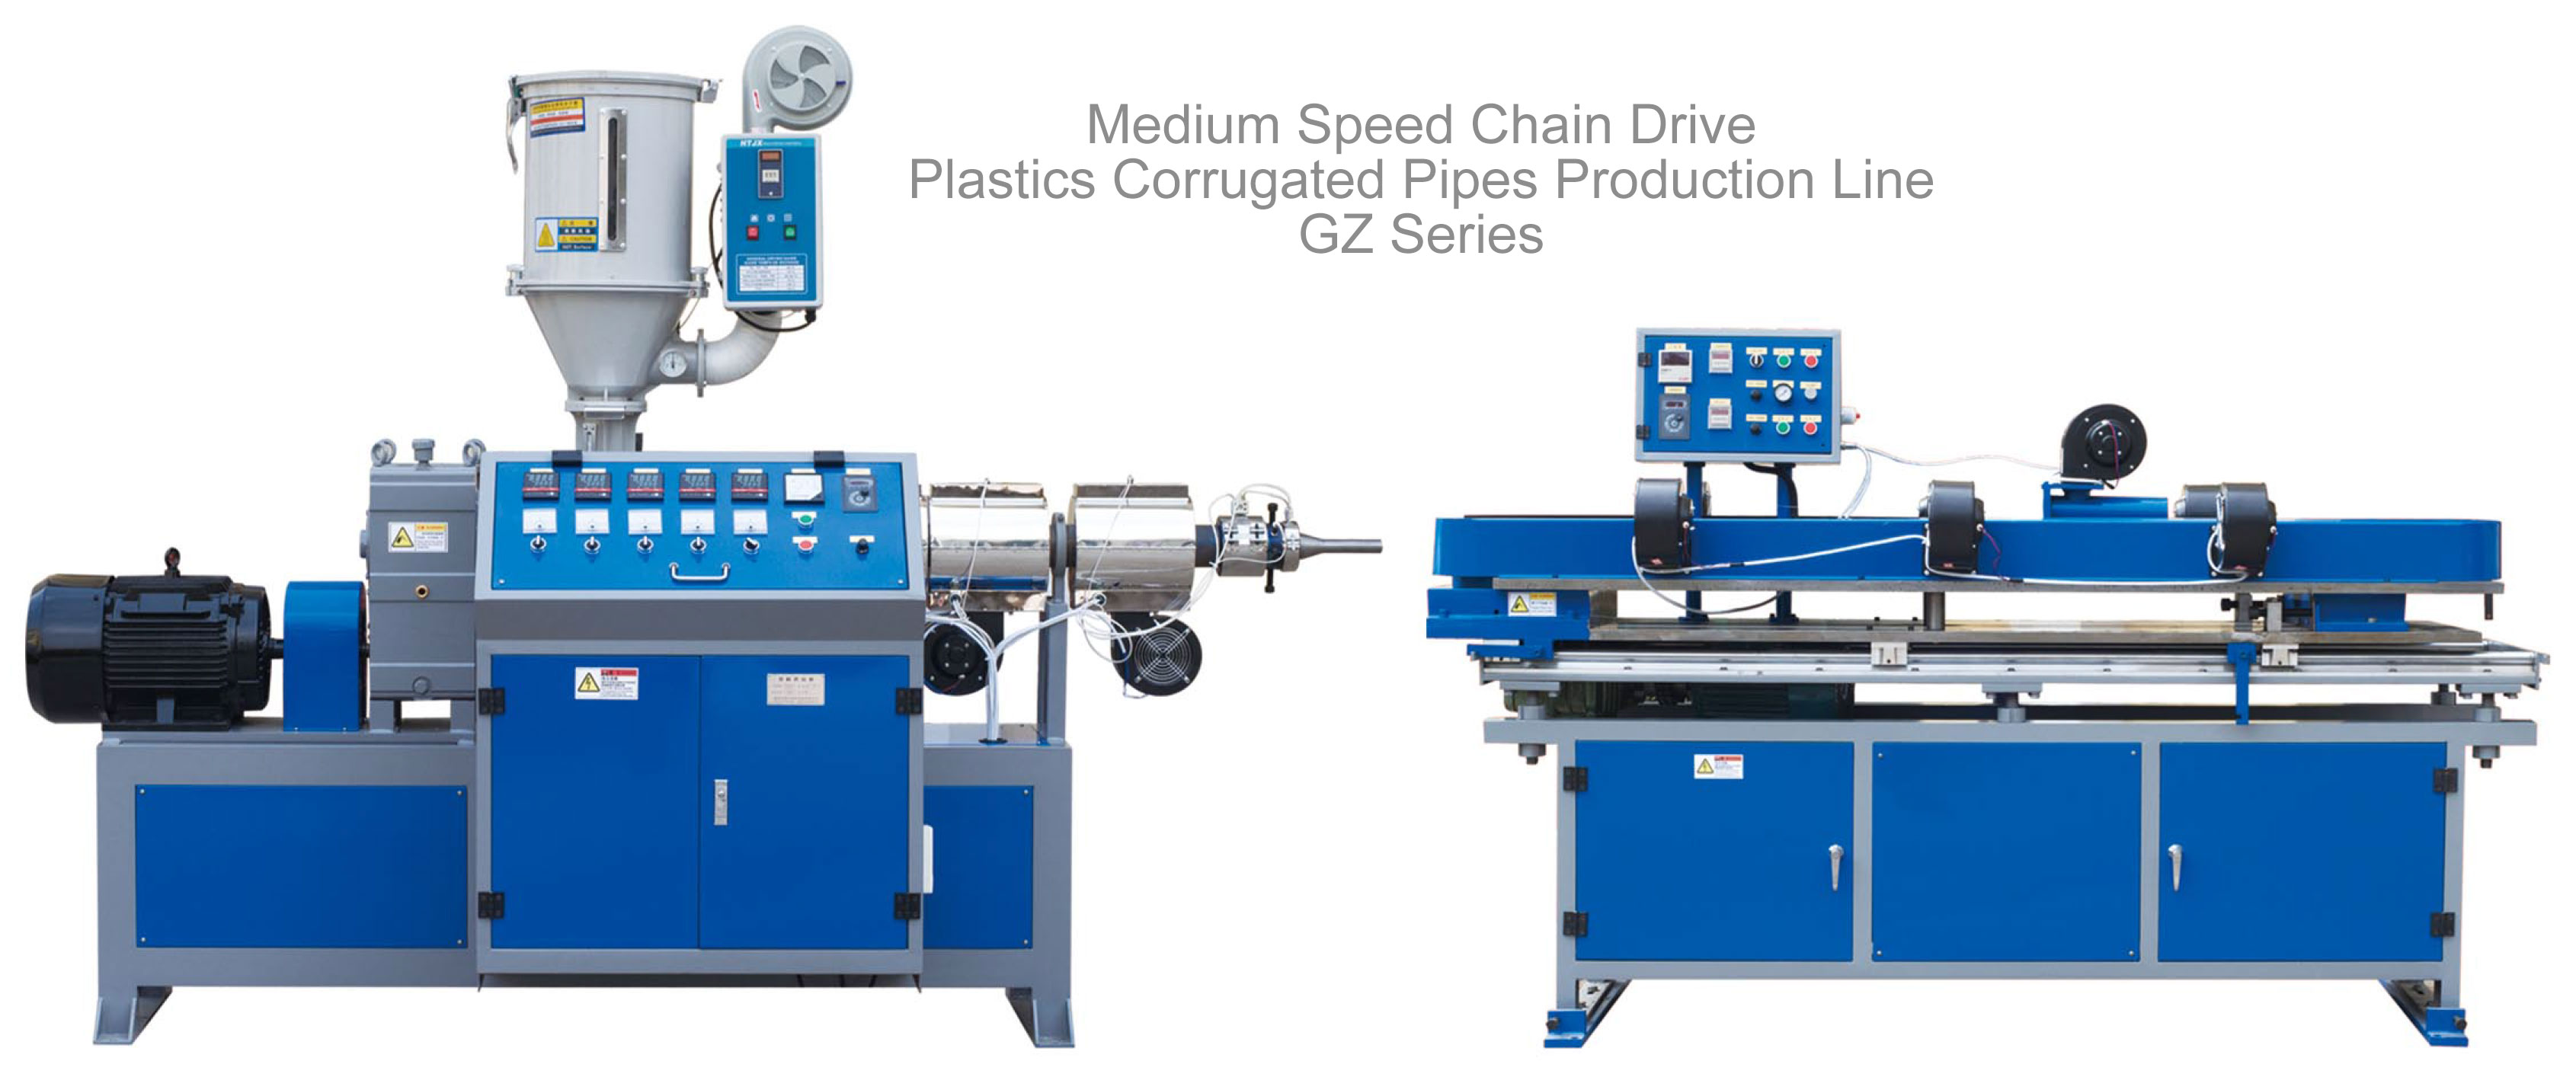 20 Medium Speed Chain Drive Plastics Corrugated Pipes Production Line GZ Series